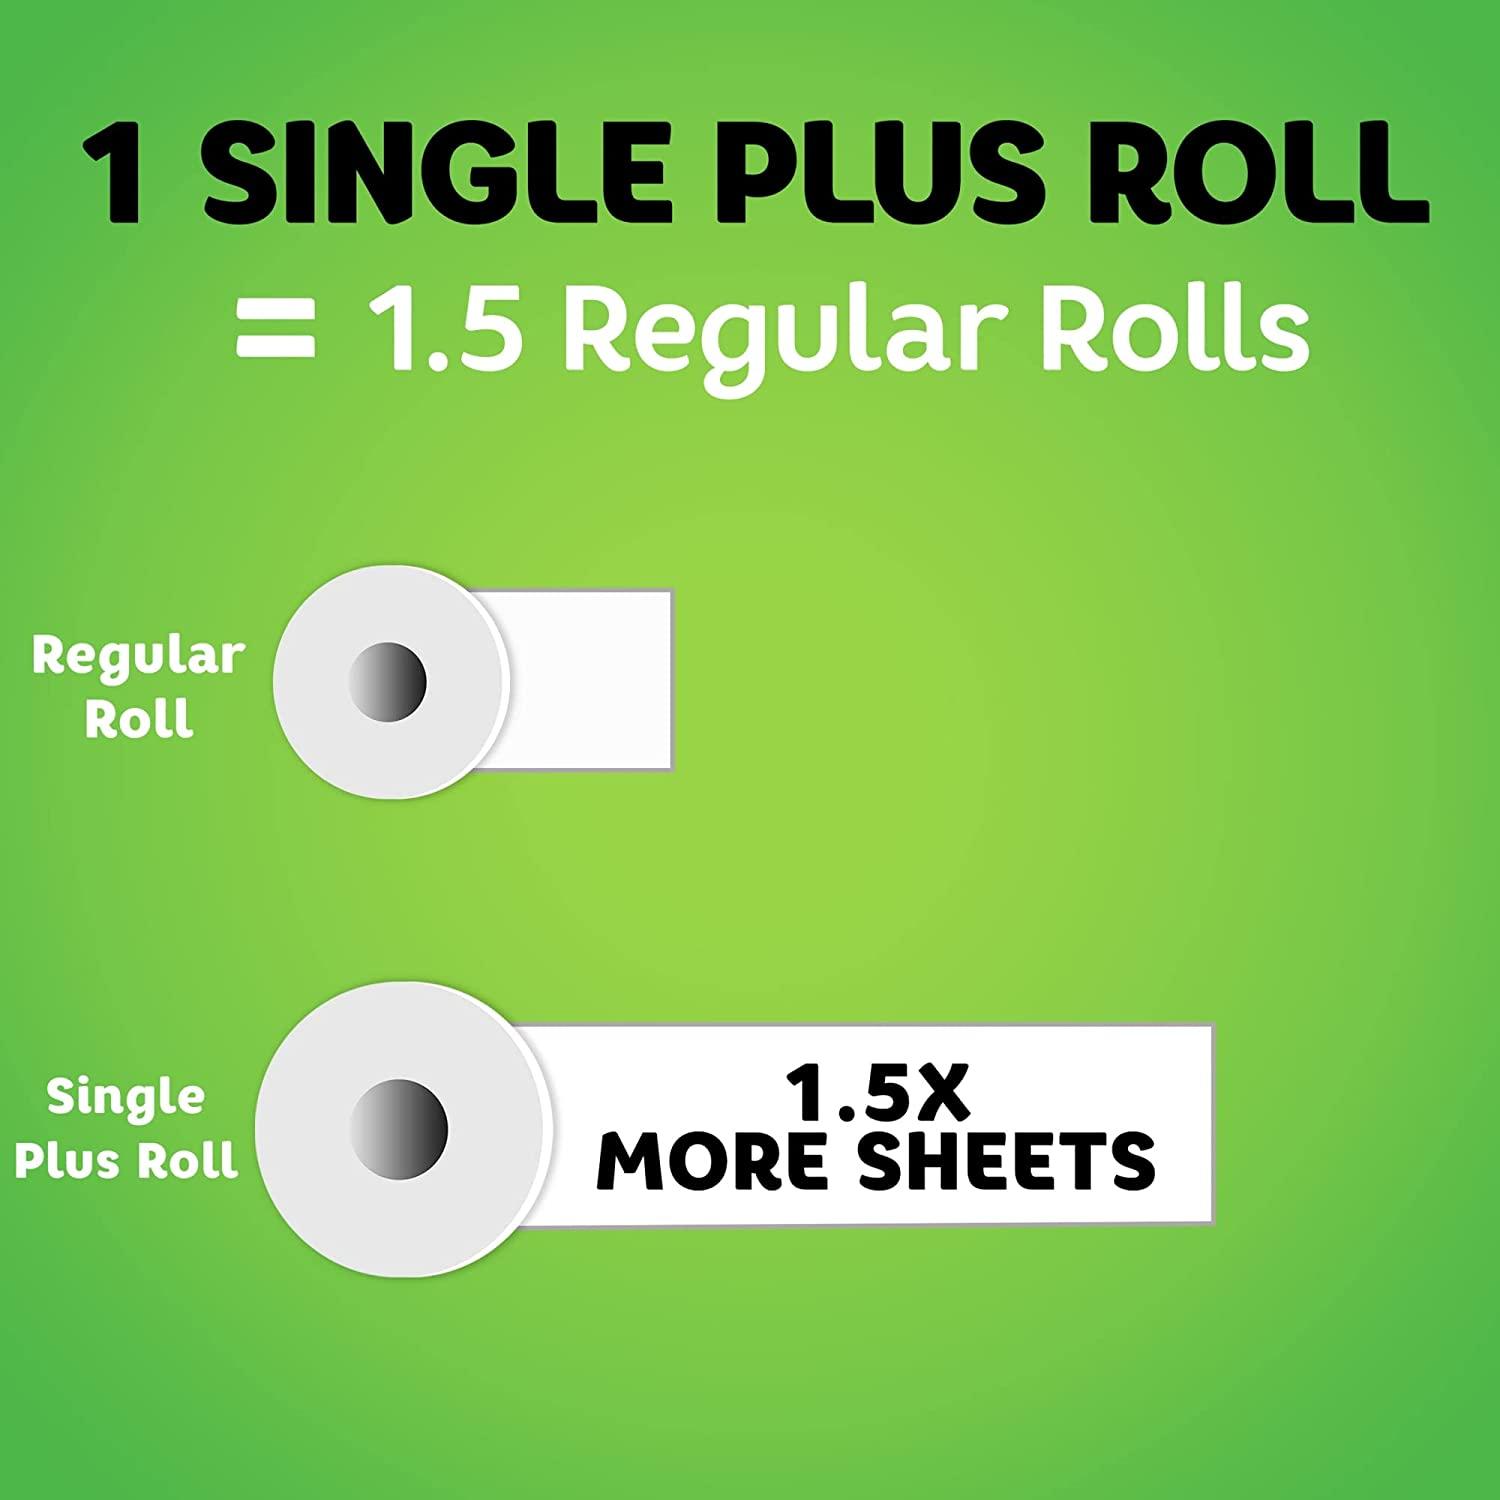 Bounty Paper Towels, Full Sheets, Single Plus Rolls, White, 2-Ply - 12 rolls